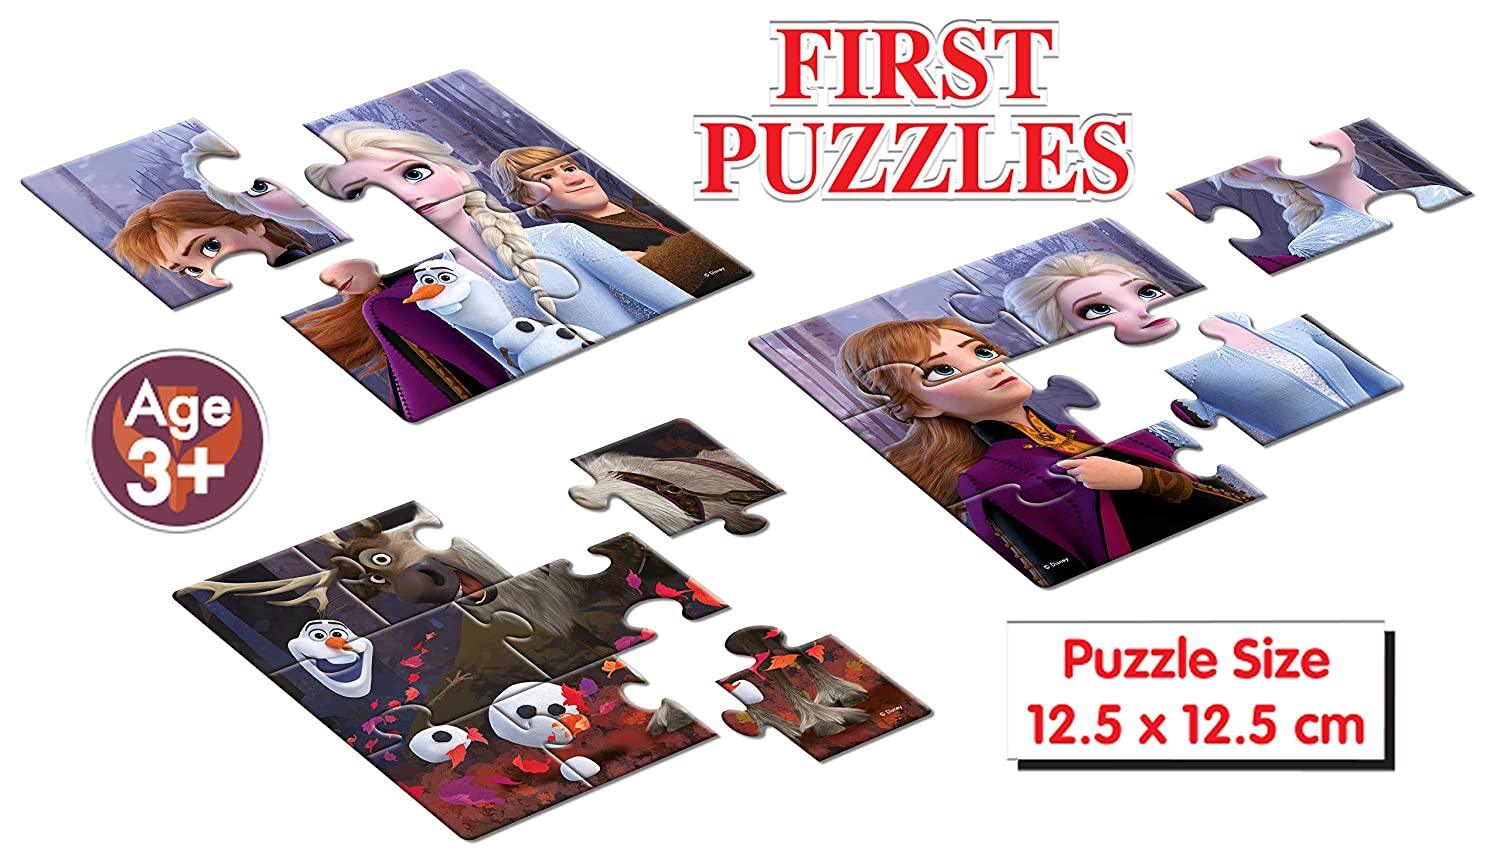 Frank Disney Frozen II - First Puzzles